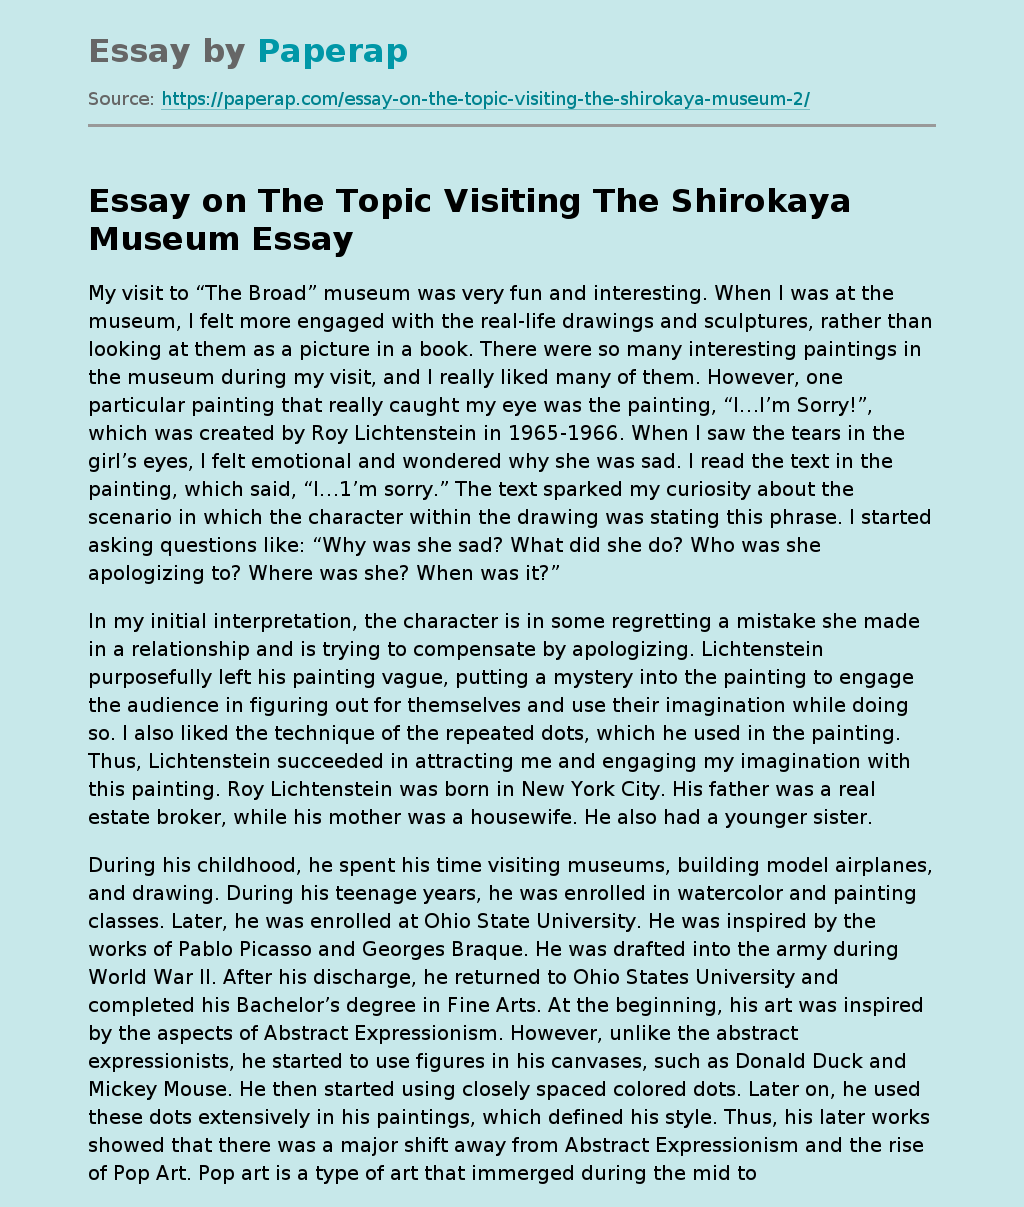 Essay on The Topic Visiting The Shirokaya Museum